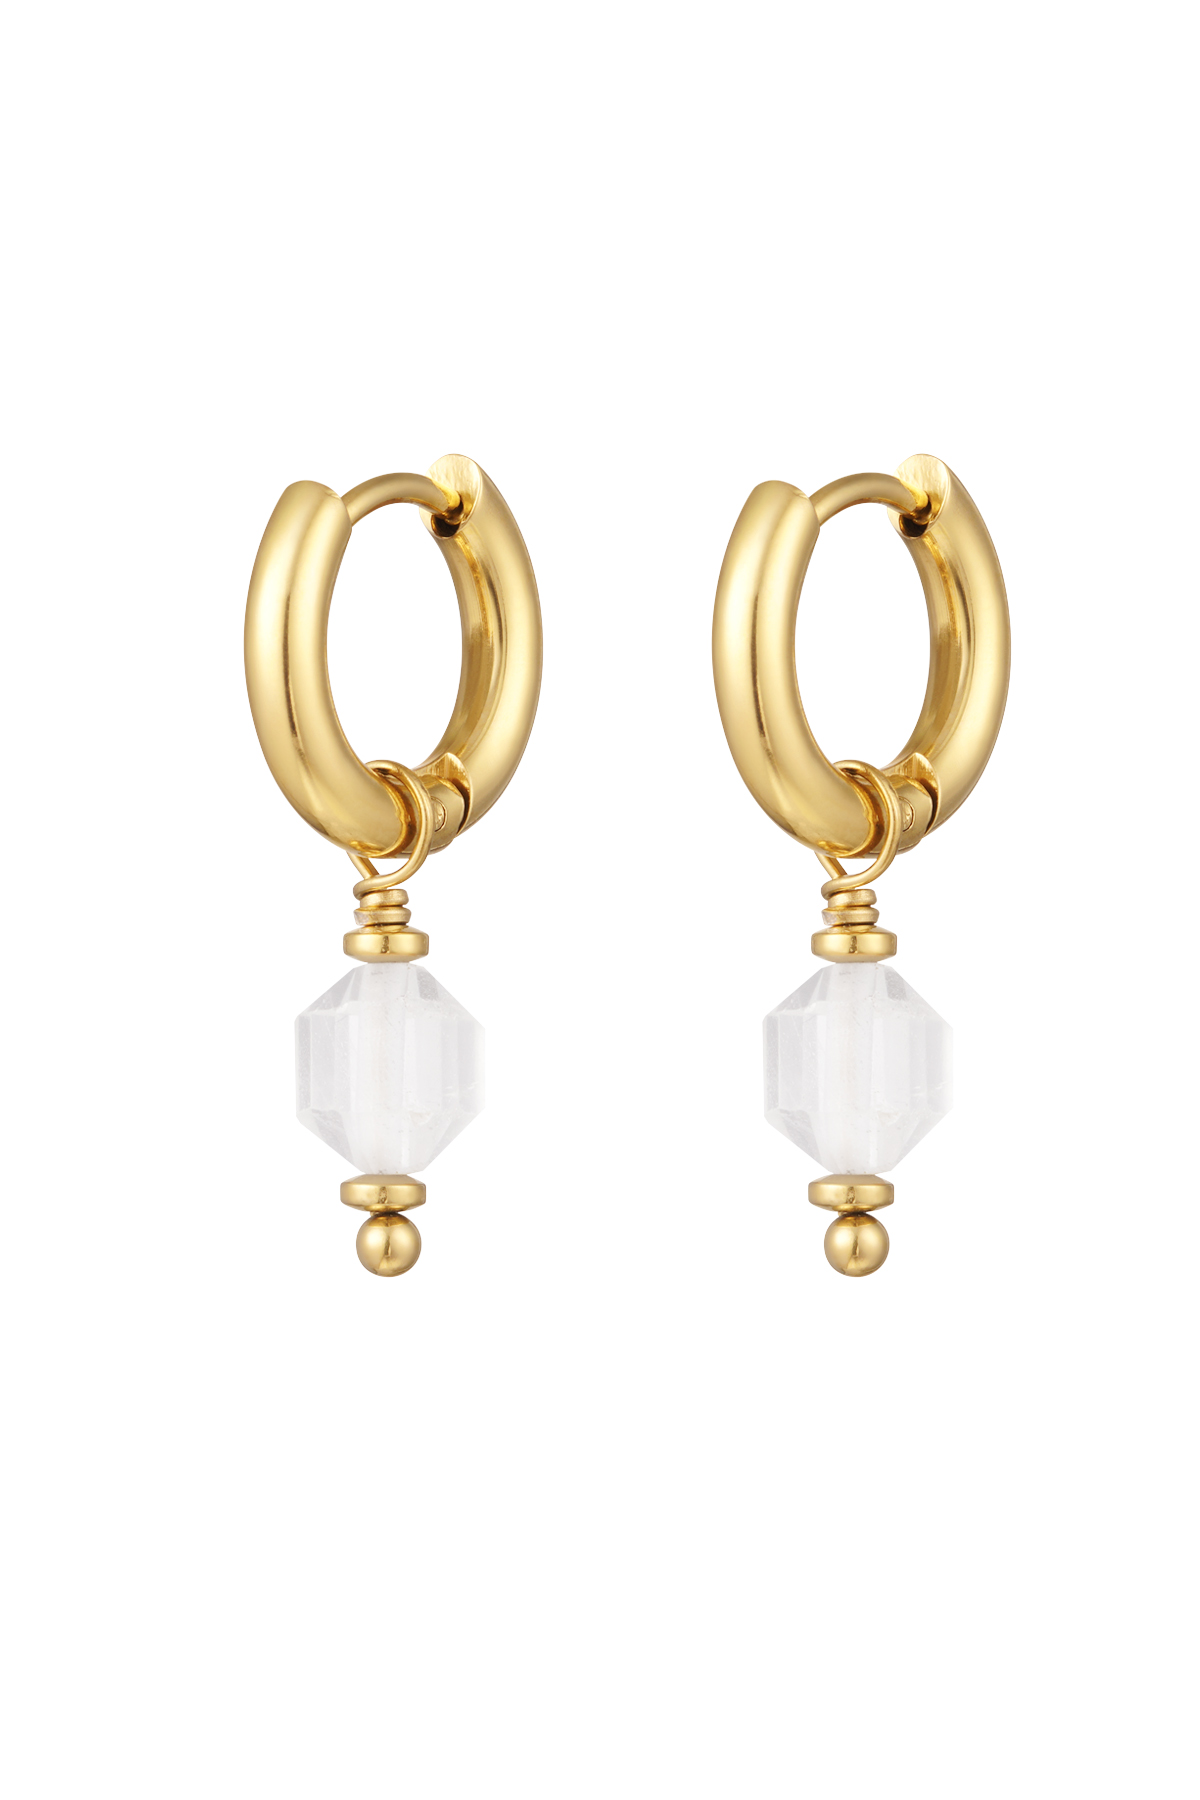 April stone earrings - gold/white